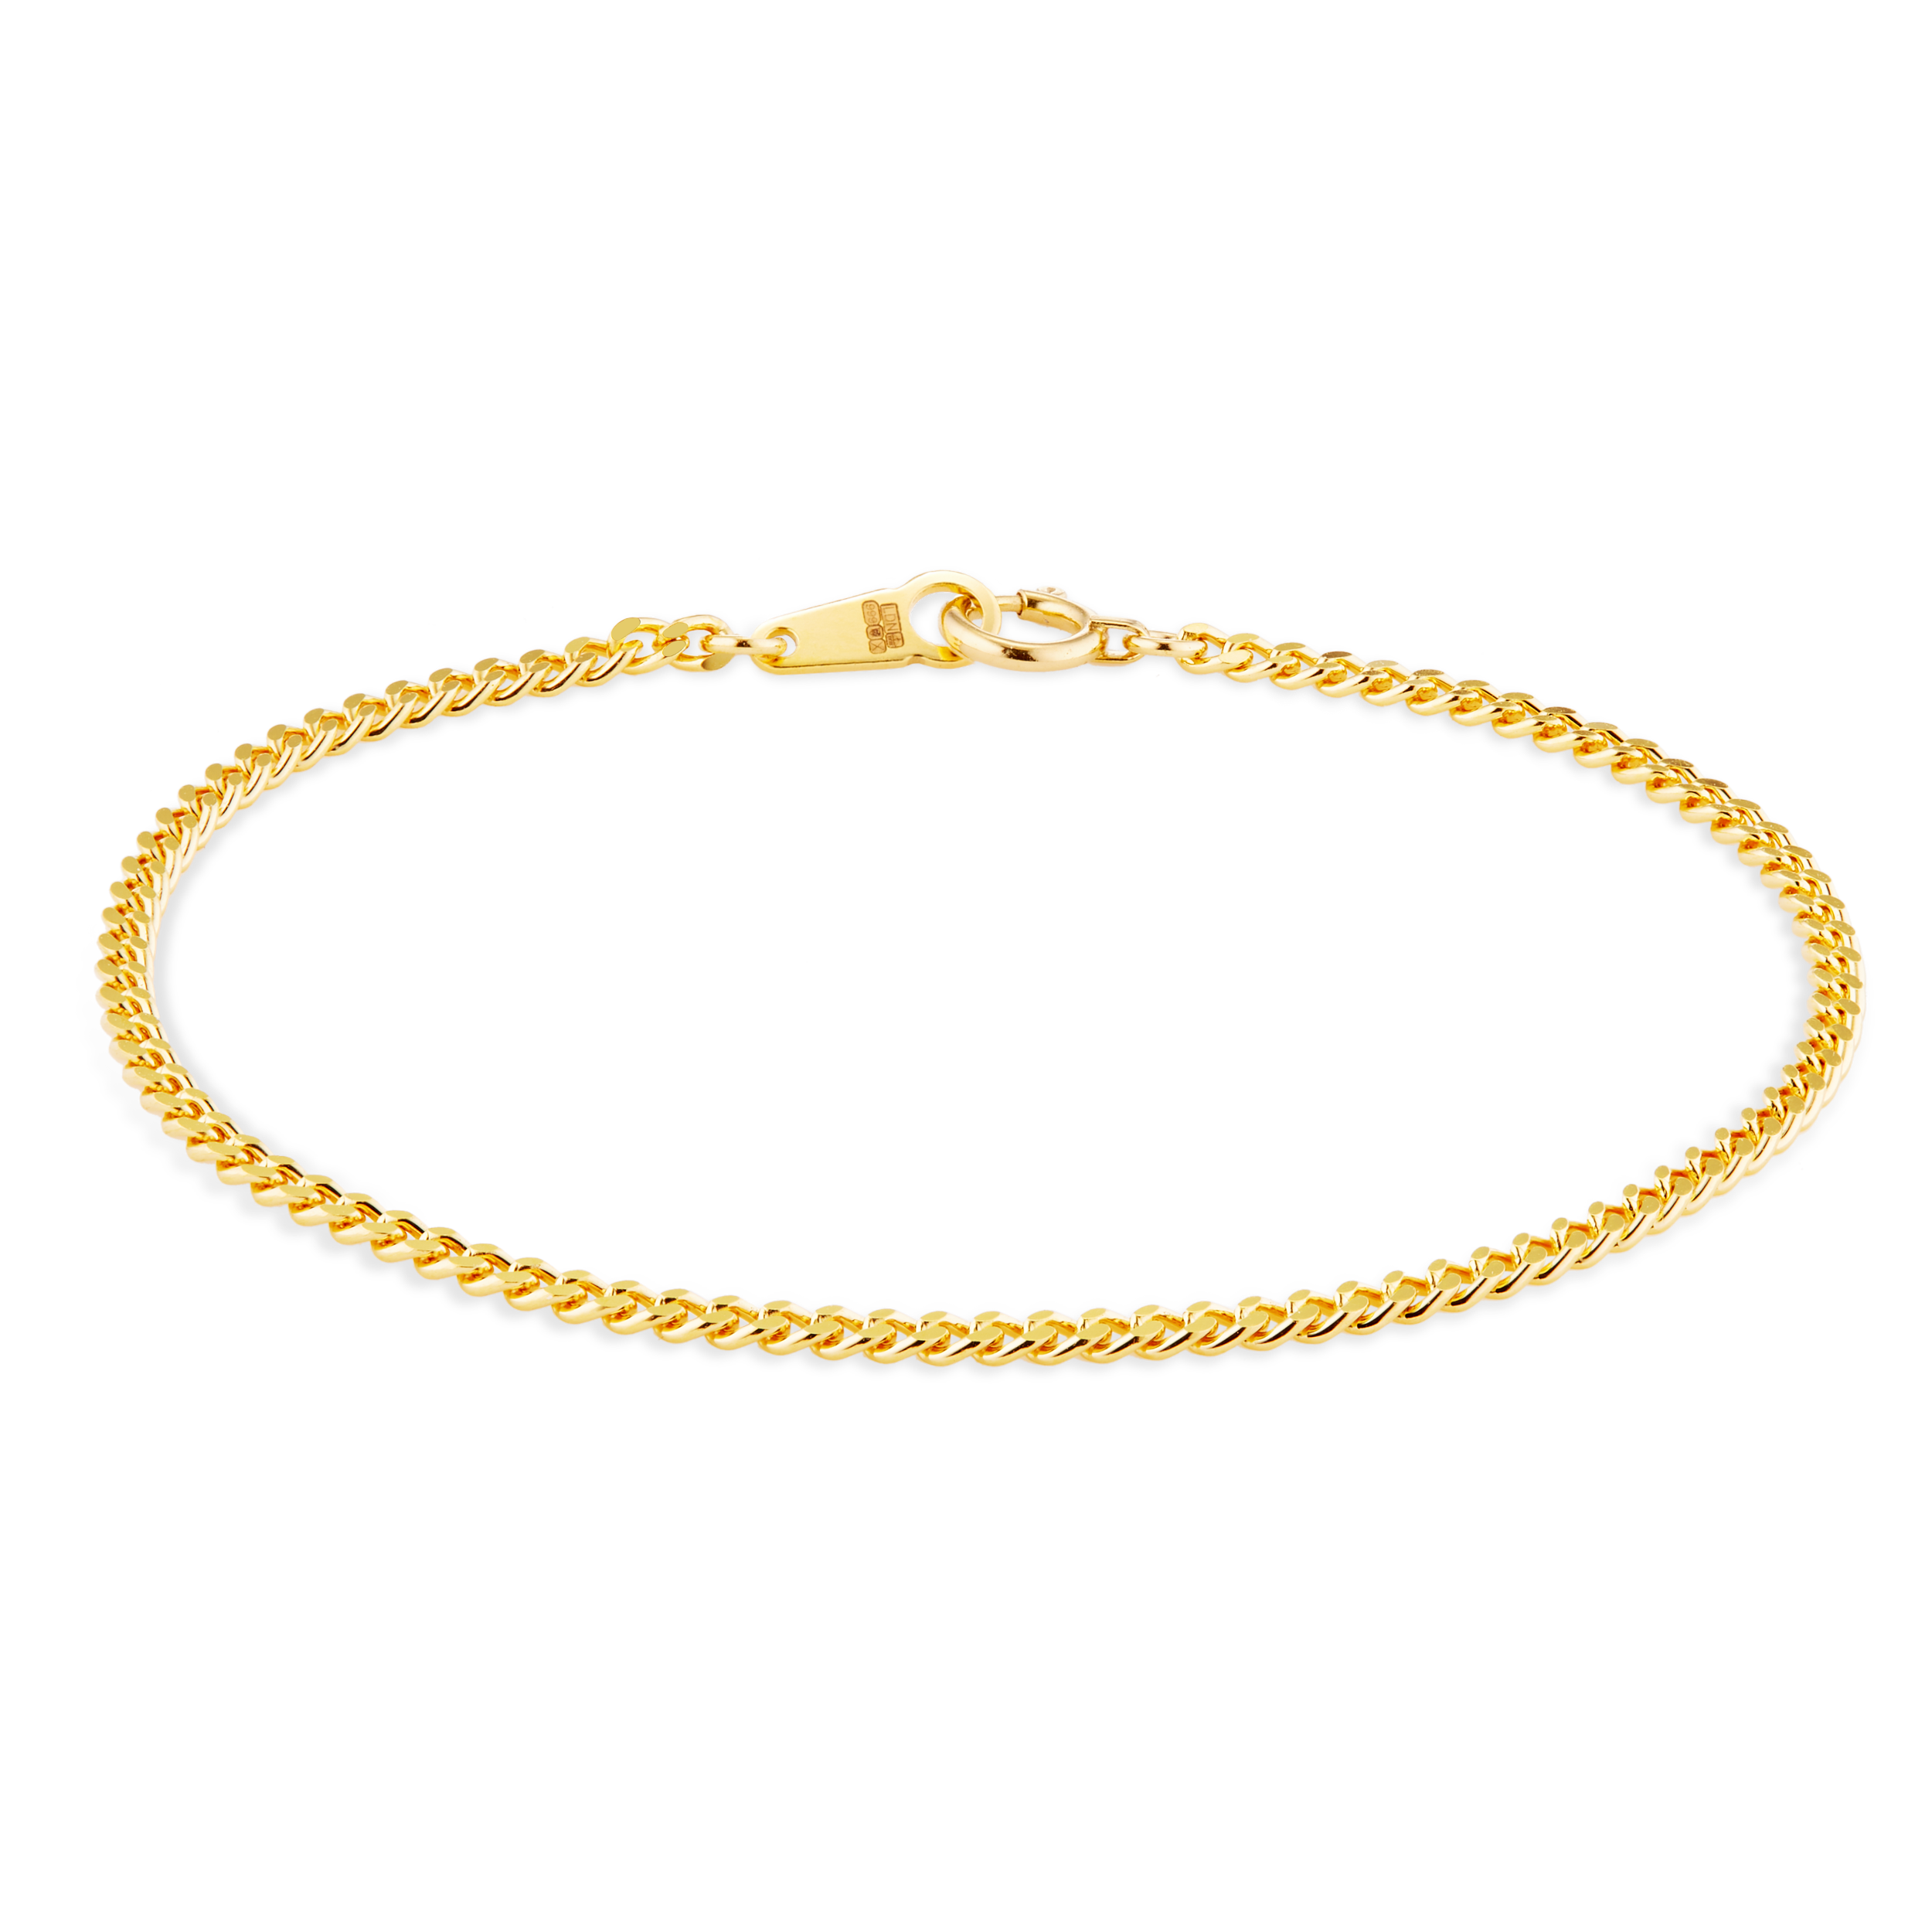 Details more than 79 anaval gold bracelet latest - 3tdesign.edu.vn